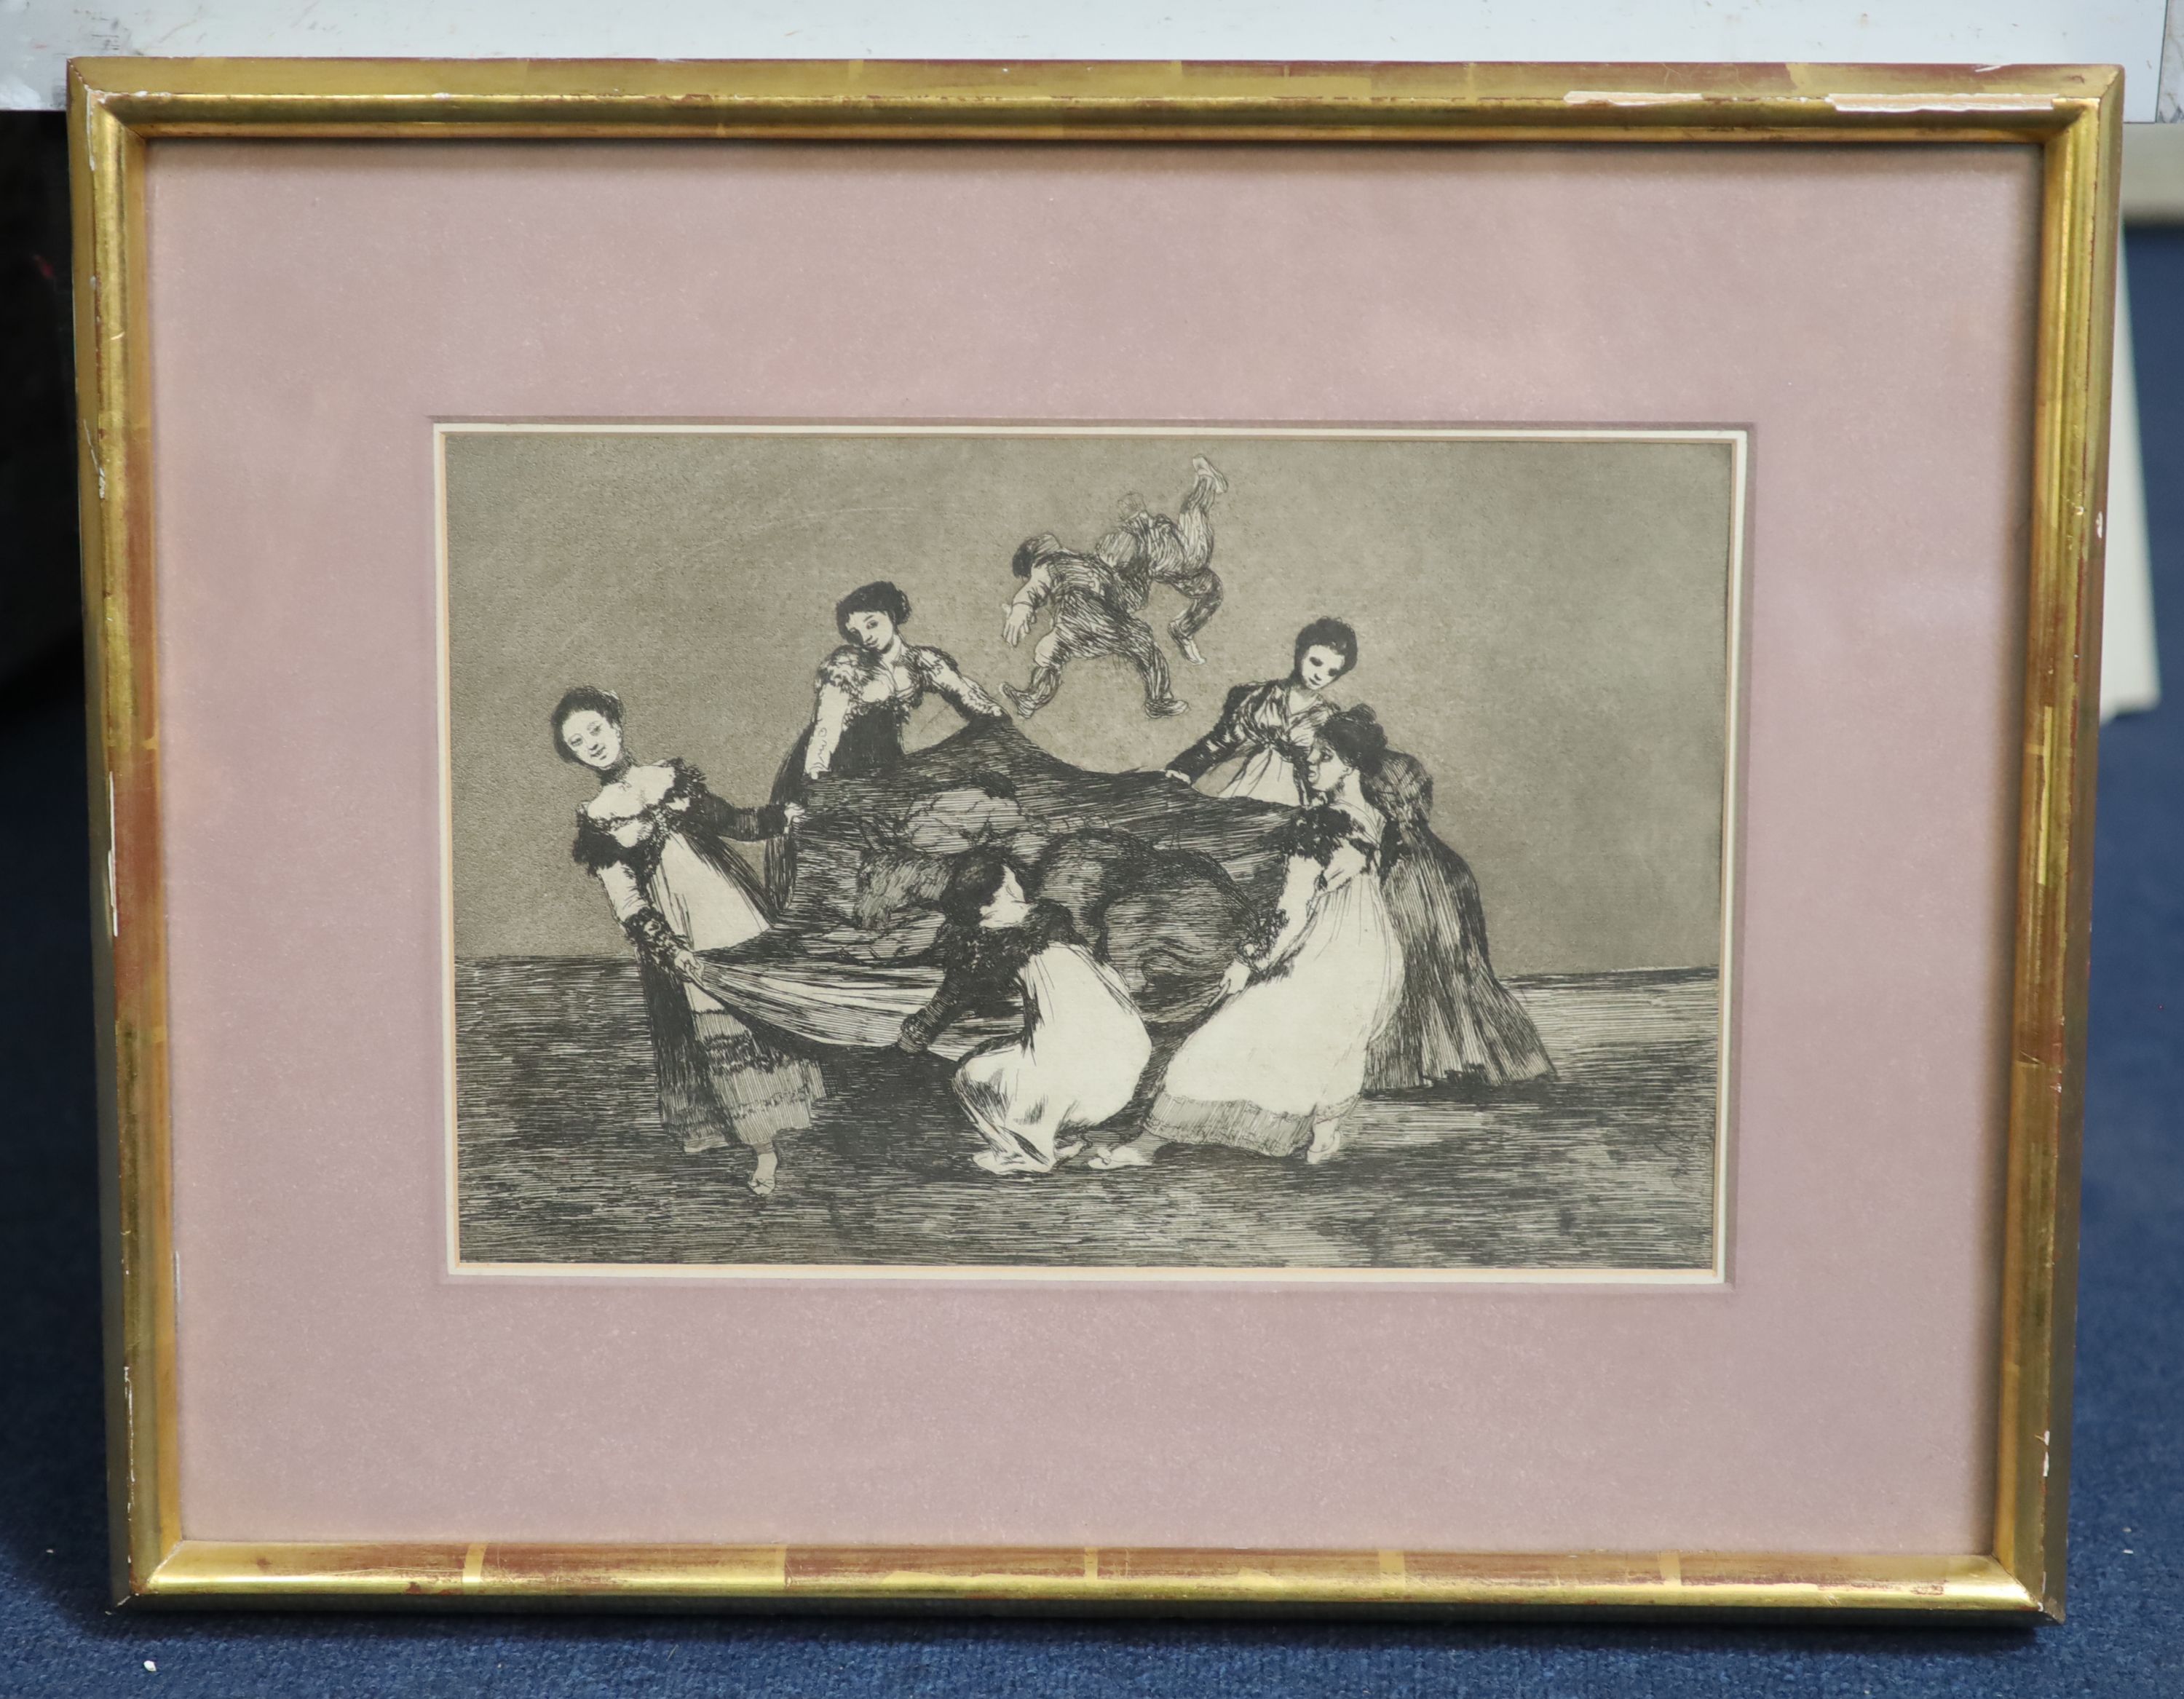 Francisco De Goya (Spanish, 1746-1828), Disparate feminino (Feminine Folly), from Los Proverbios, Etching and aquatint